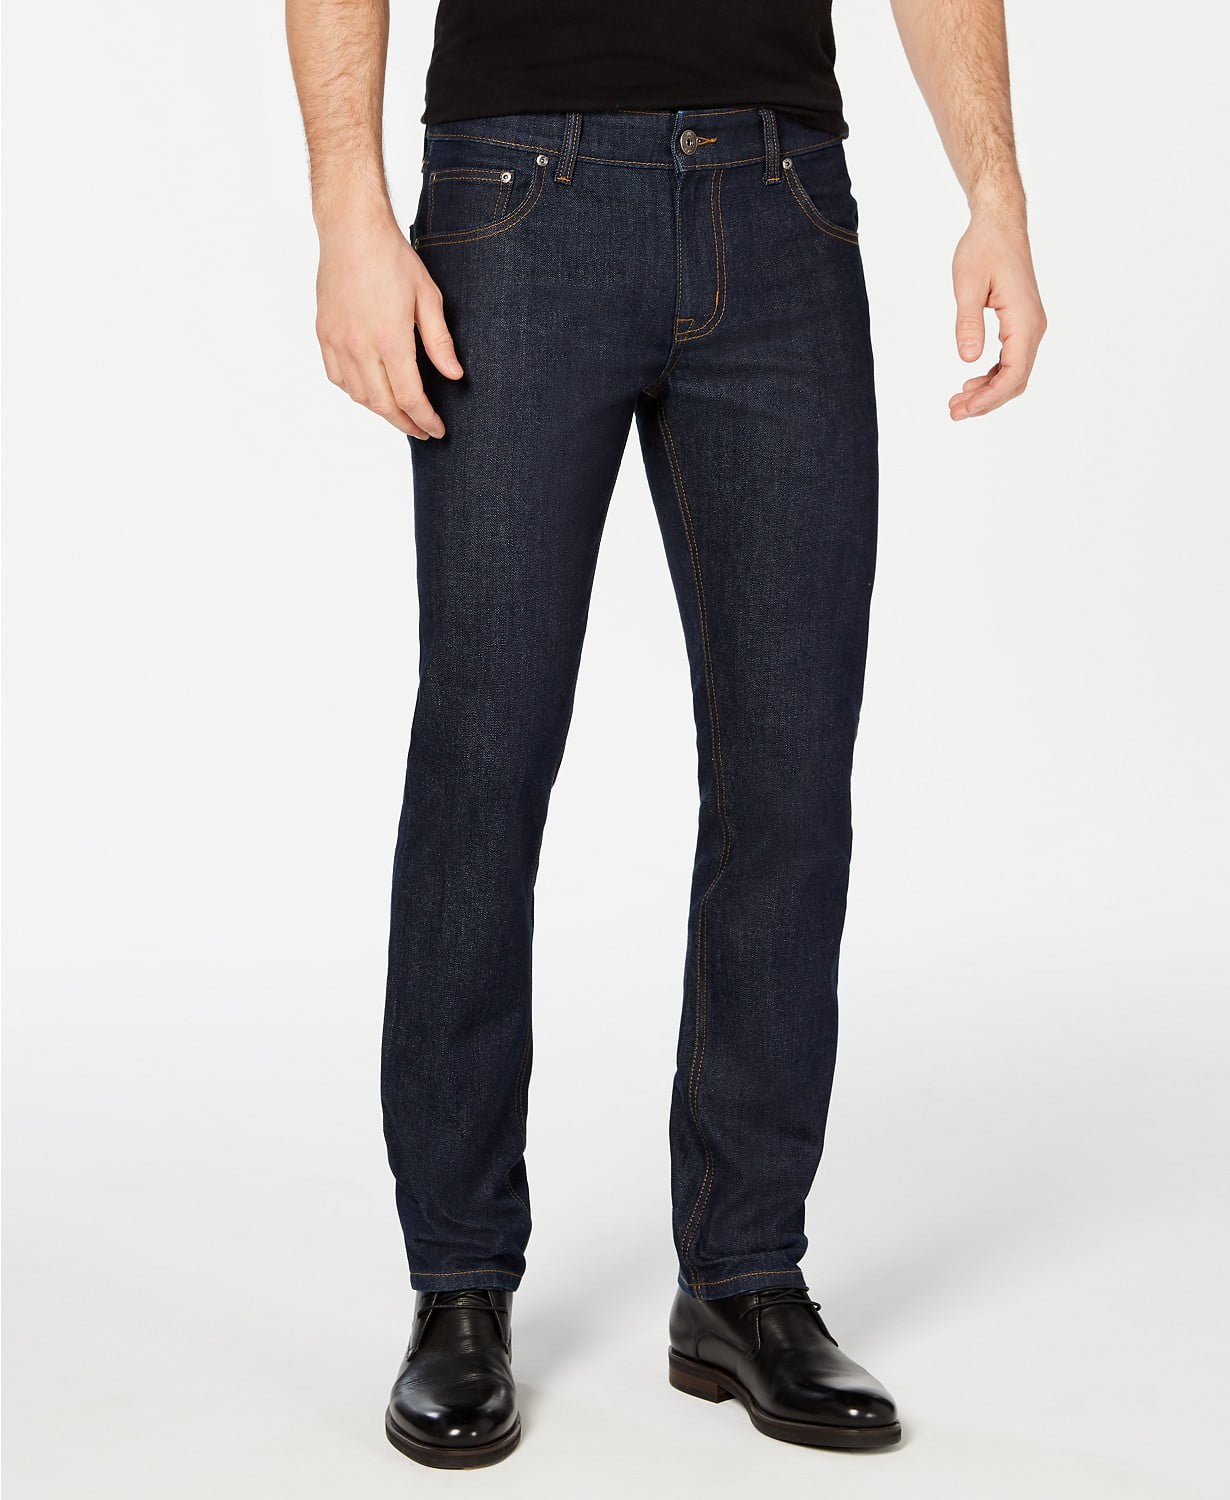 trække sig tilbage slå Tether I.N.C. Berlin Men's Stretch Slim Straight Jeans Dark Raw Wash Size 33X30 &  38X30 (Dark Raw Wash,33X30) - Walmart.com